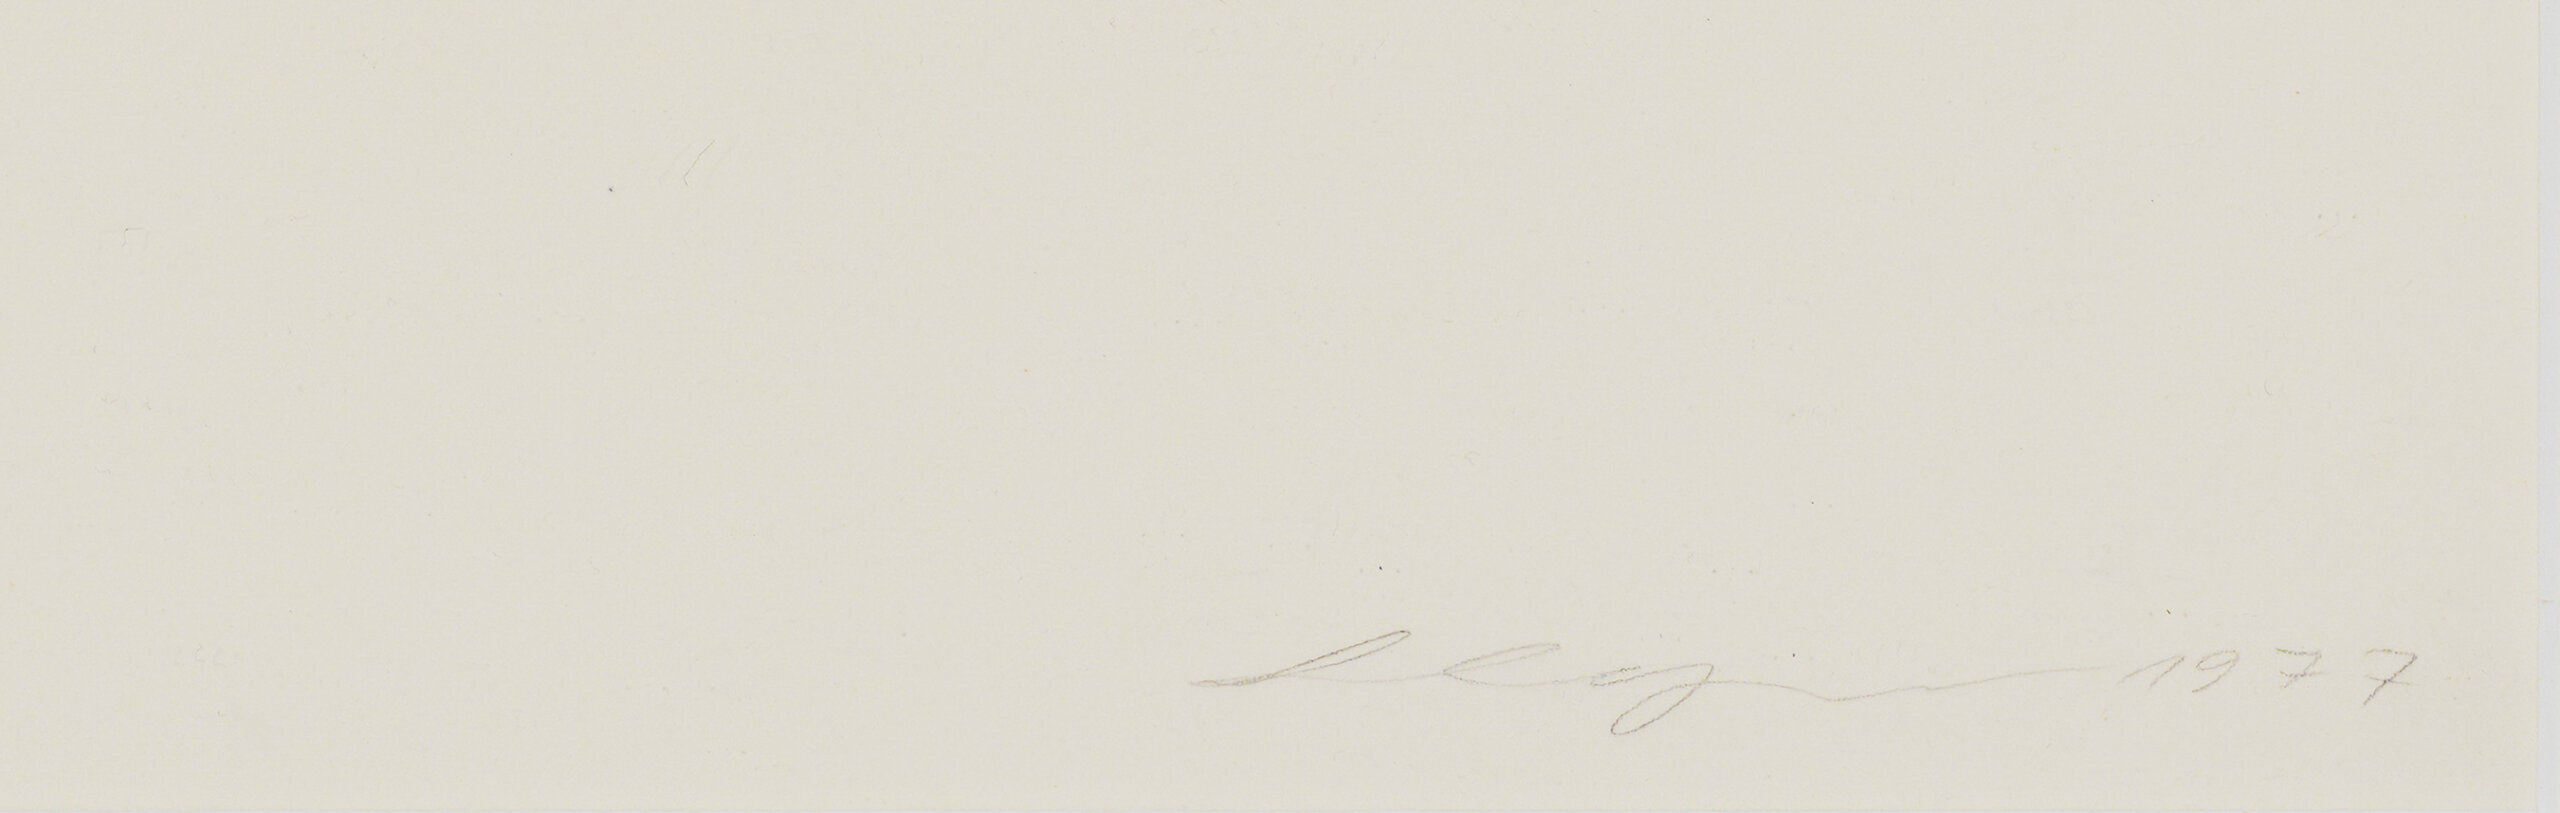 Leonhard Lapin “Ring X B”, 1977. Lm 61 x 59 cm.